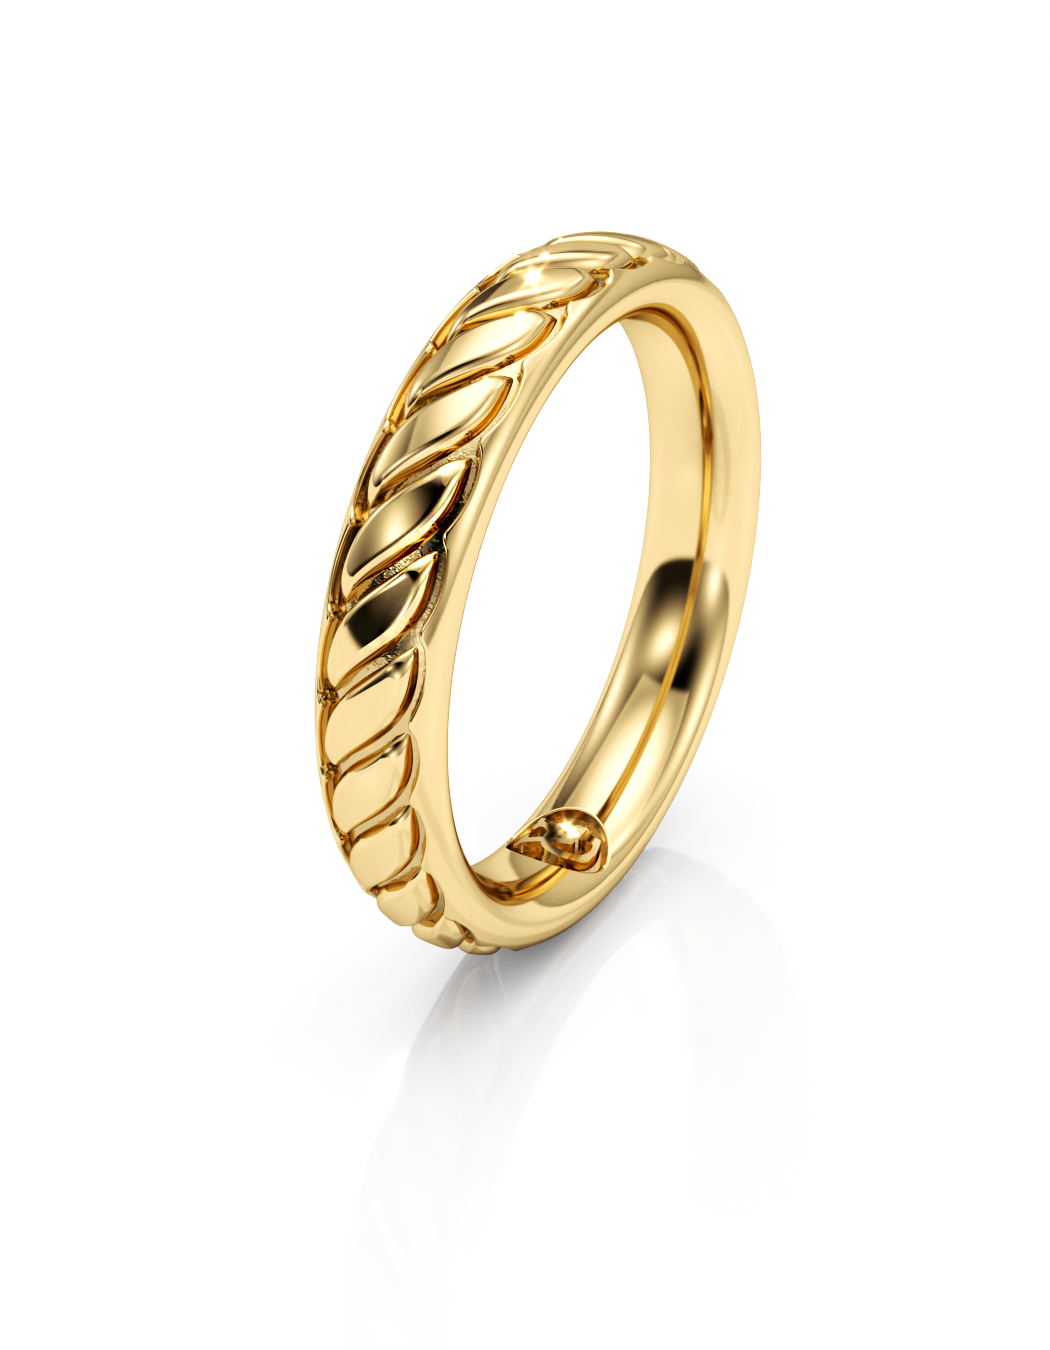 Accord Ring 14k / 18k Gold - 4mm width